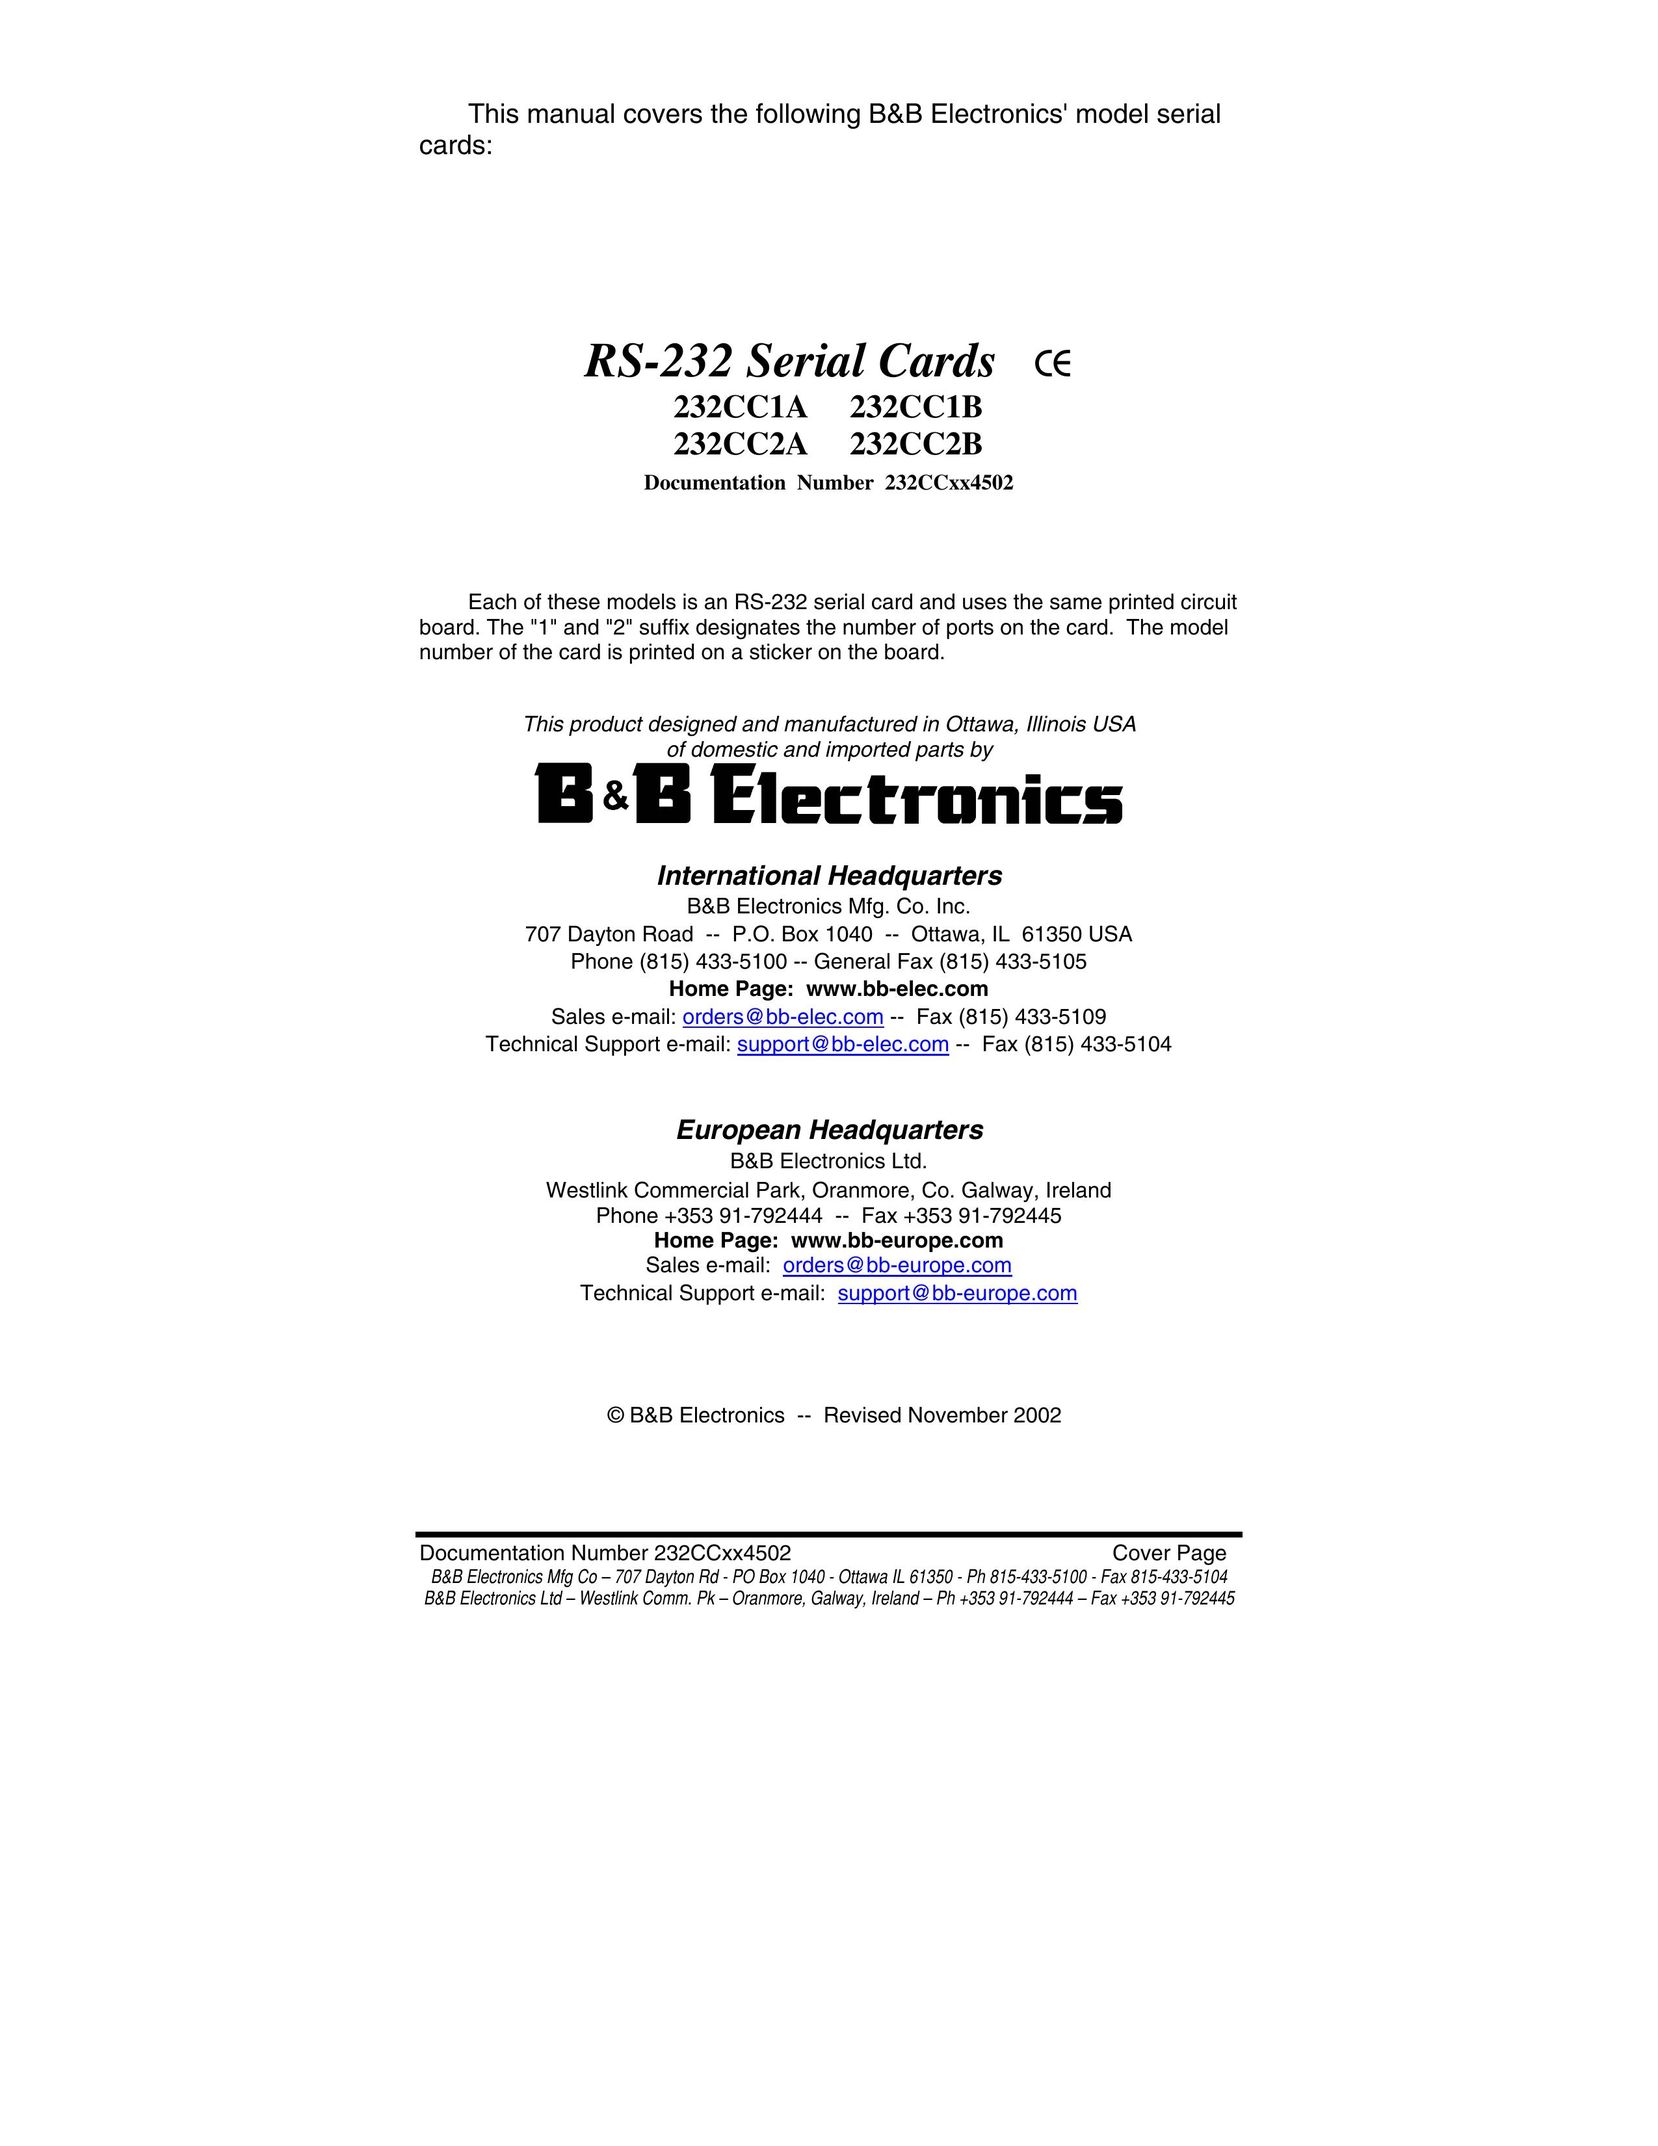 B&B Electronics 232CC2B Computer Hardware User Manual